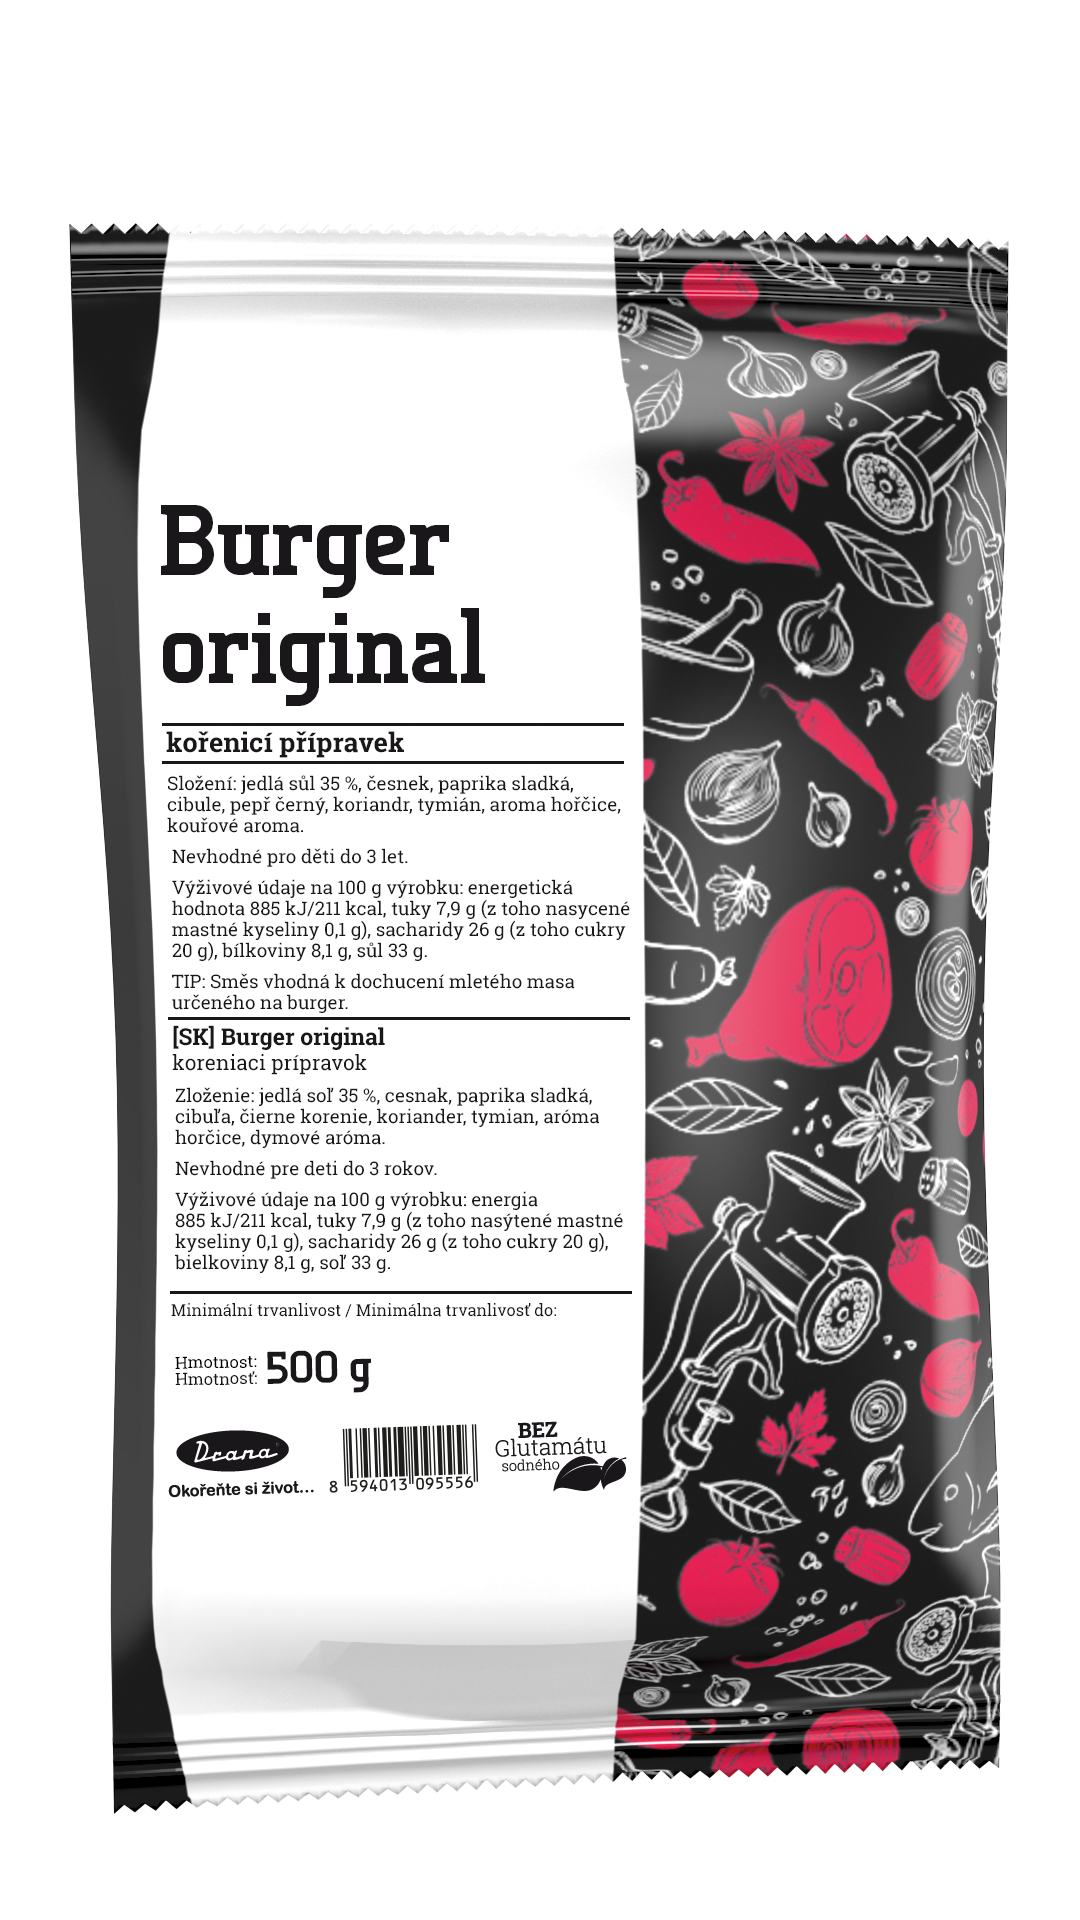 Burger original 500g